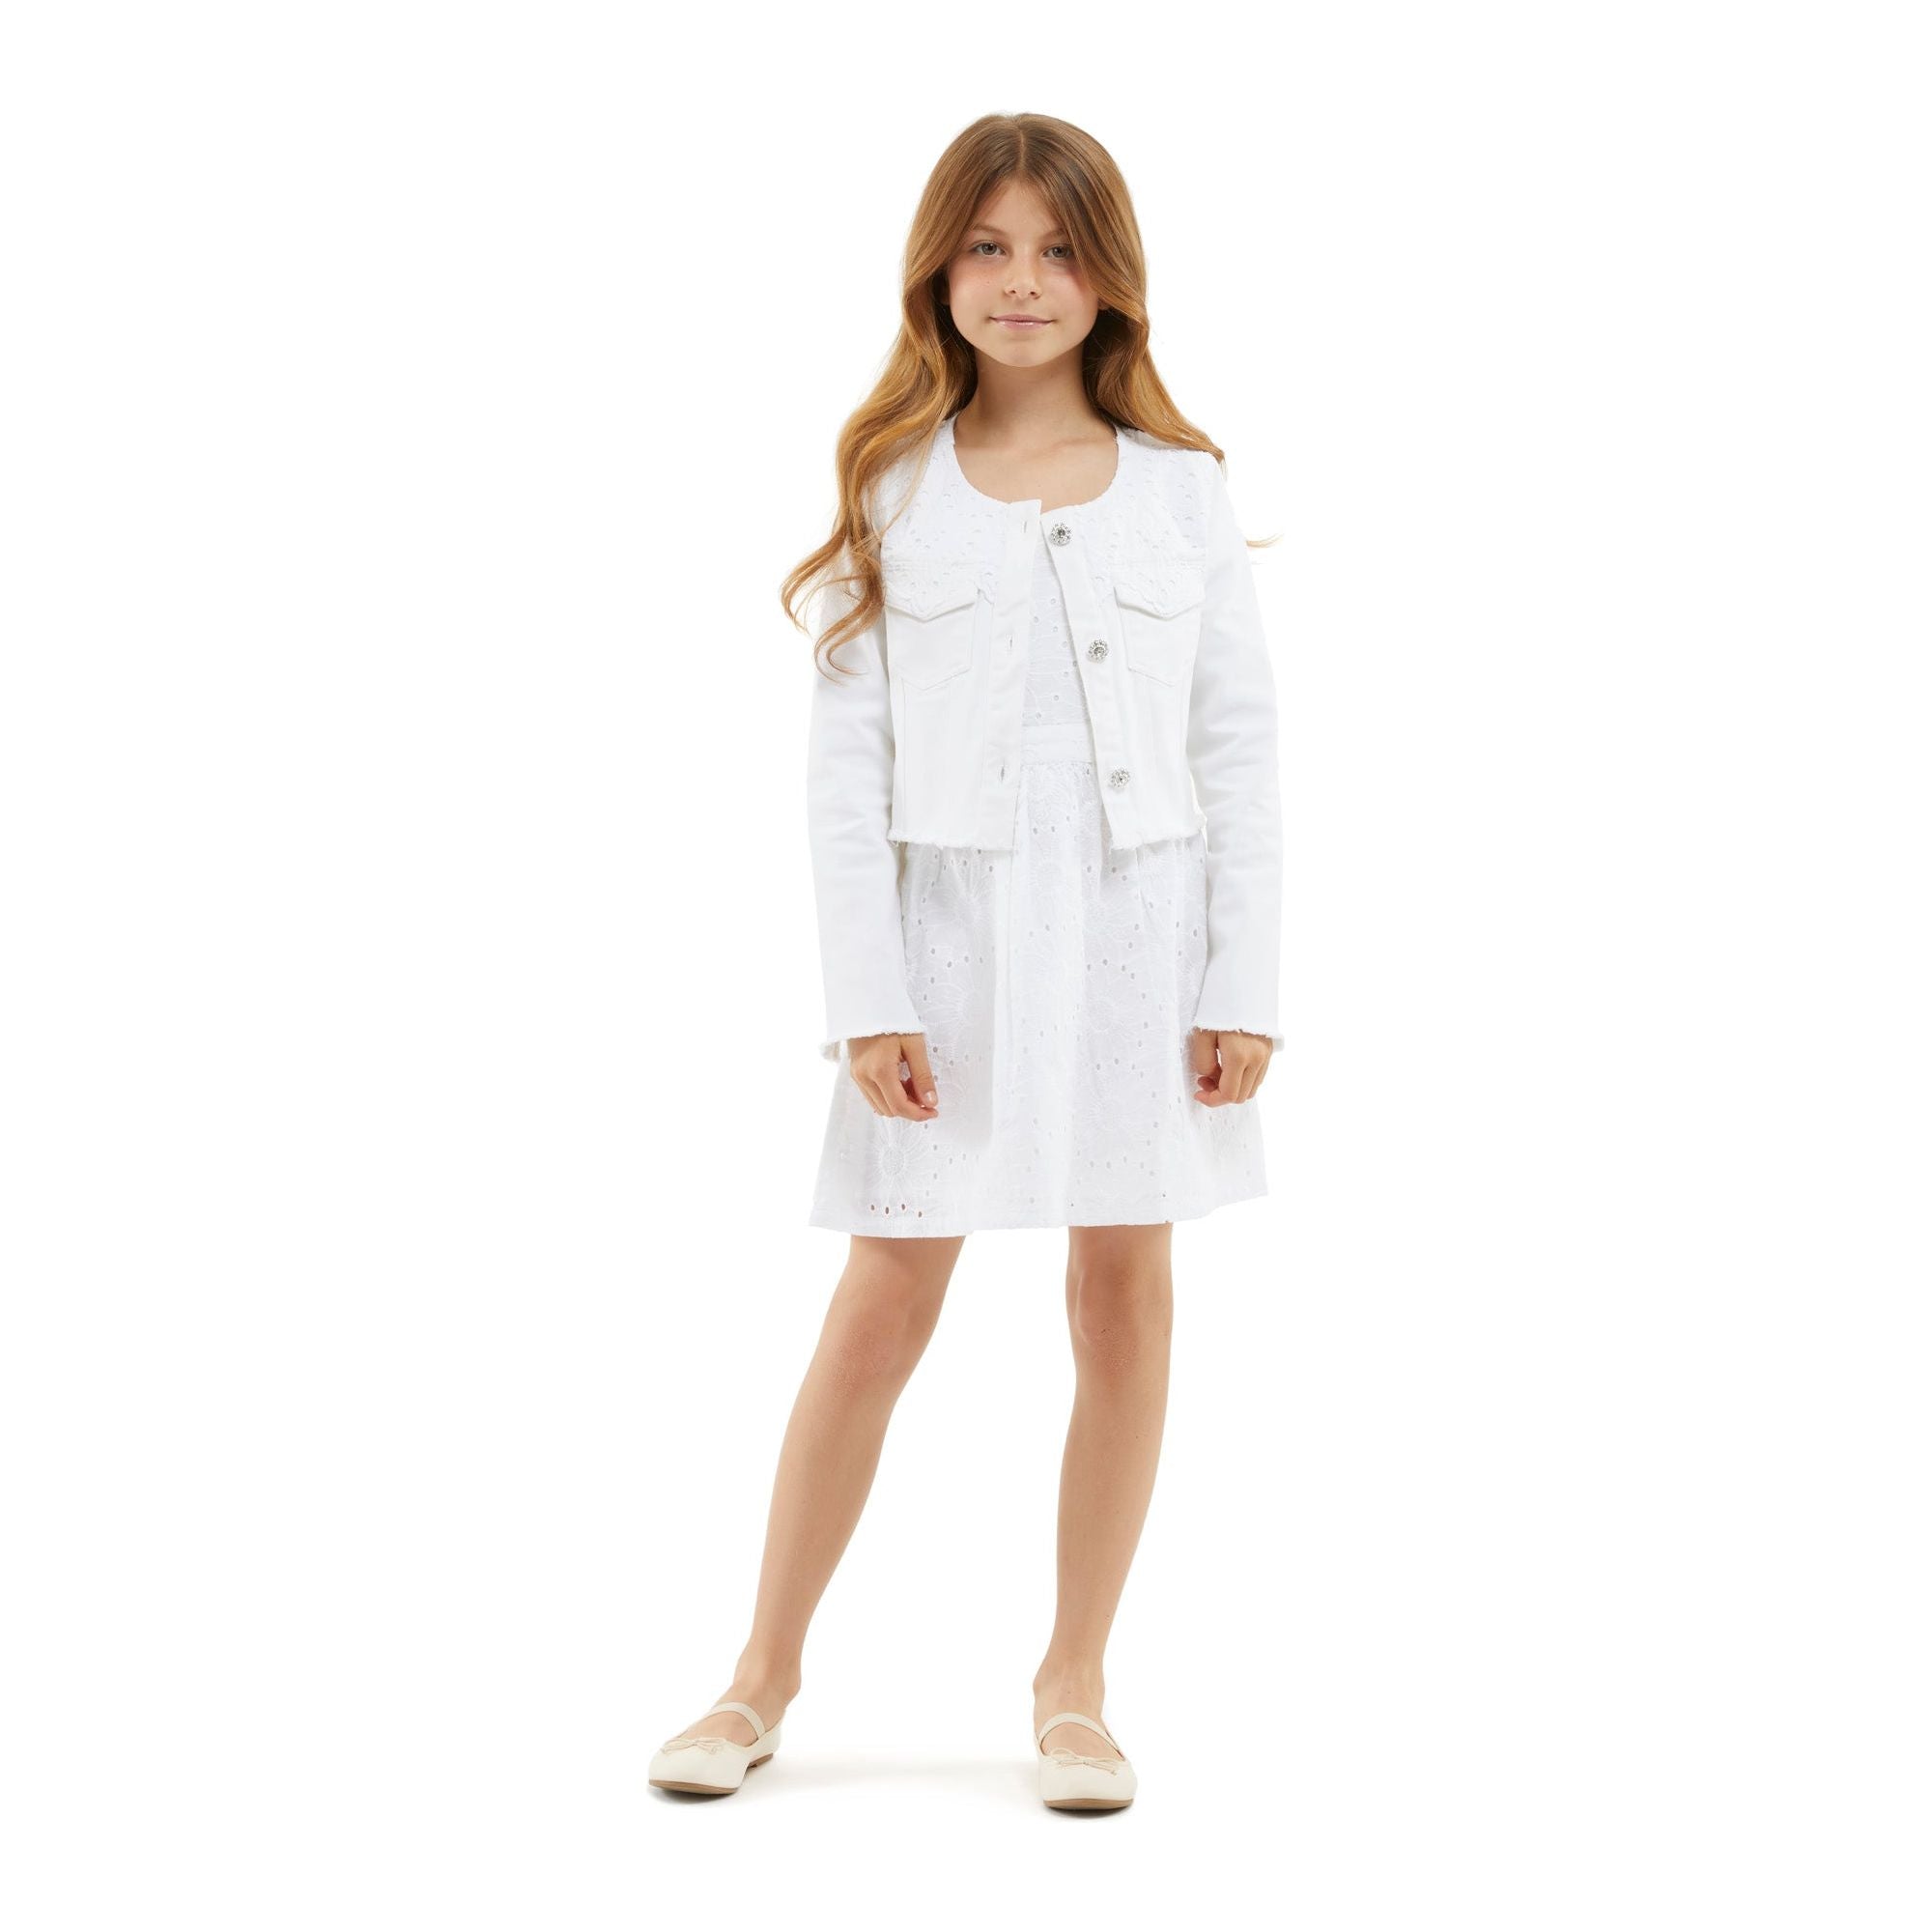 Guess - Girls Denim Jacket in Cream White